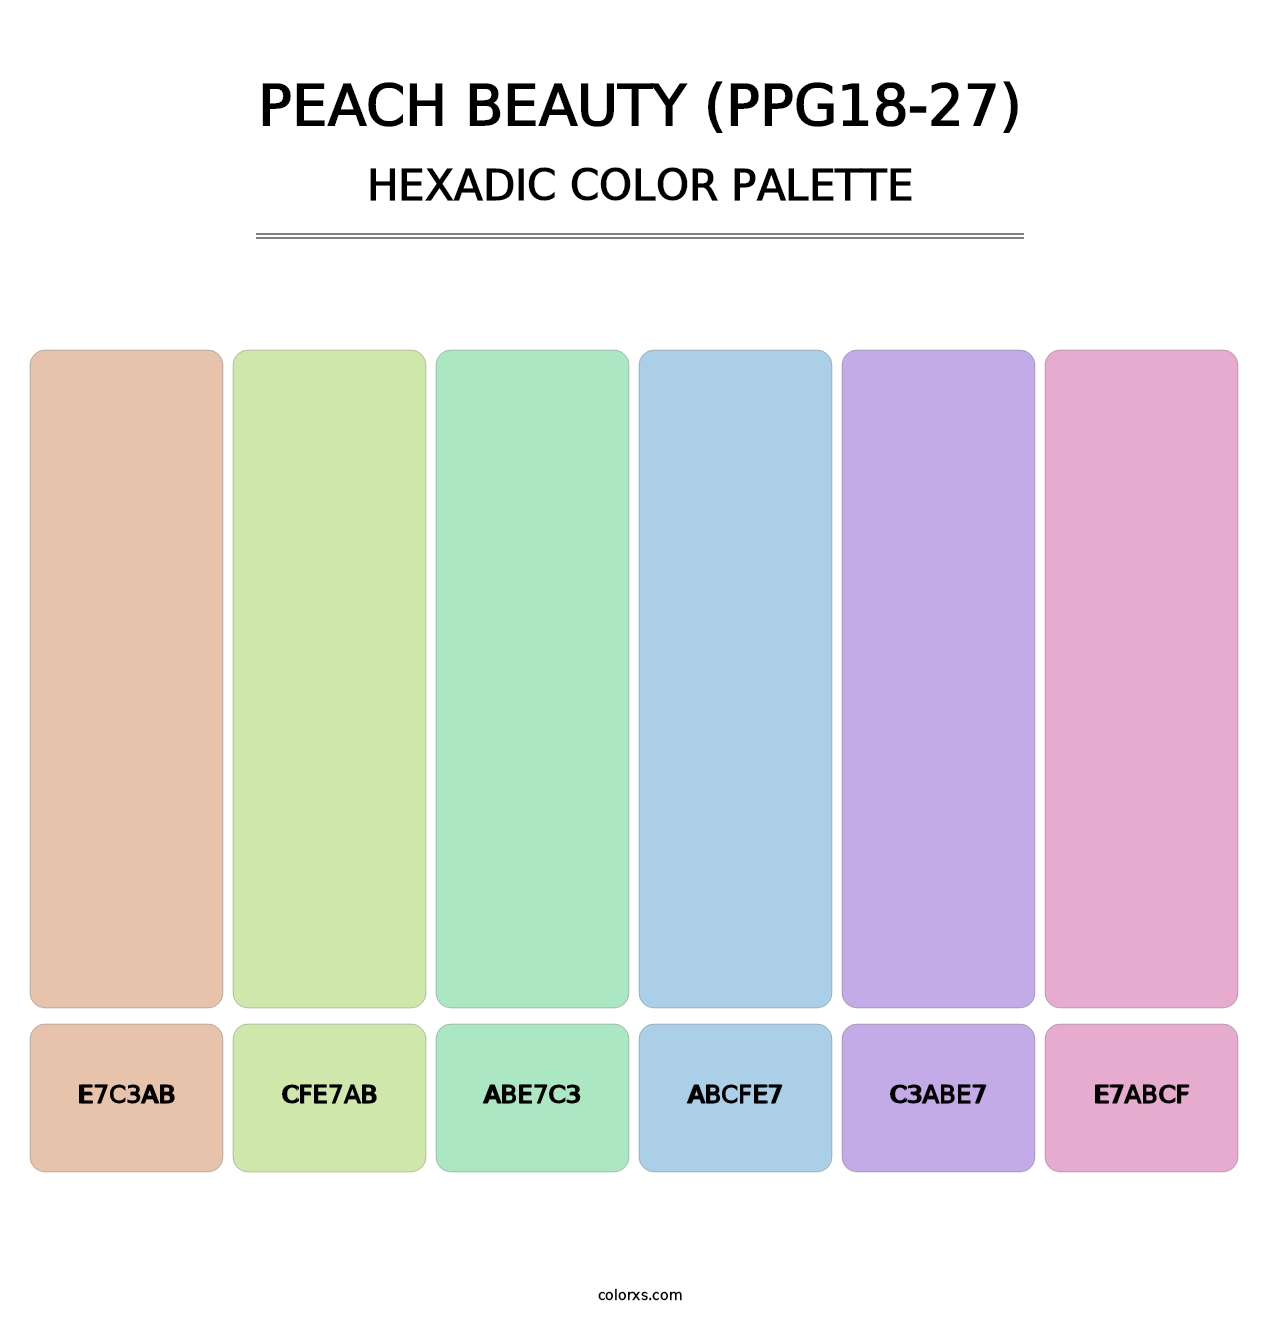 Peach Beauty (PPG18-27) - Hexadic Color Palette